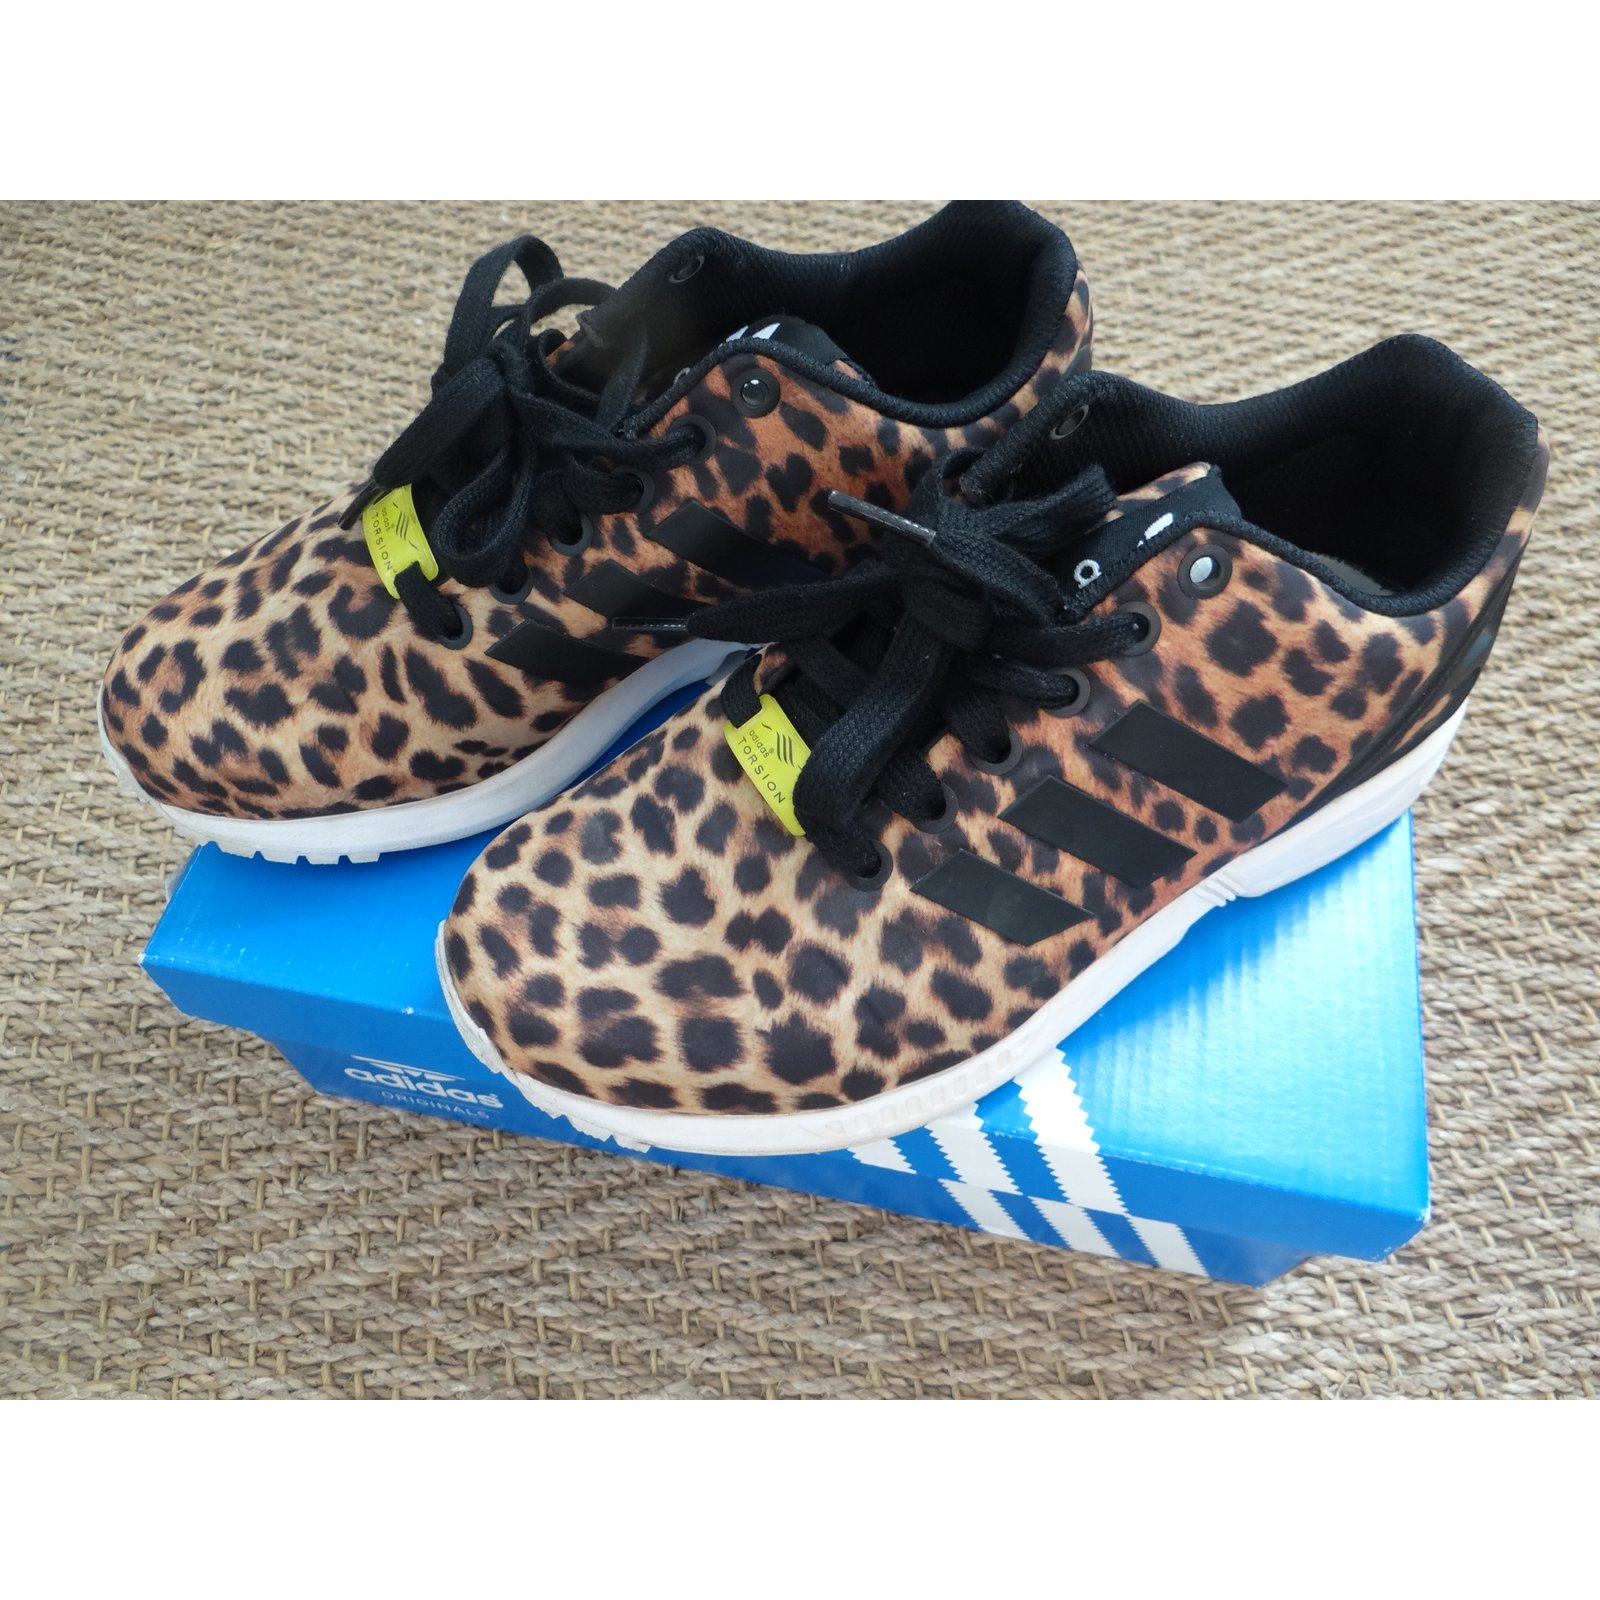 adidas zx flux leopard jordan